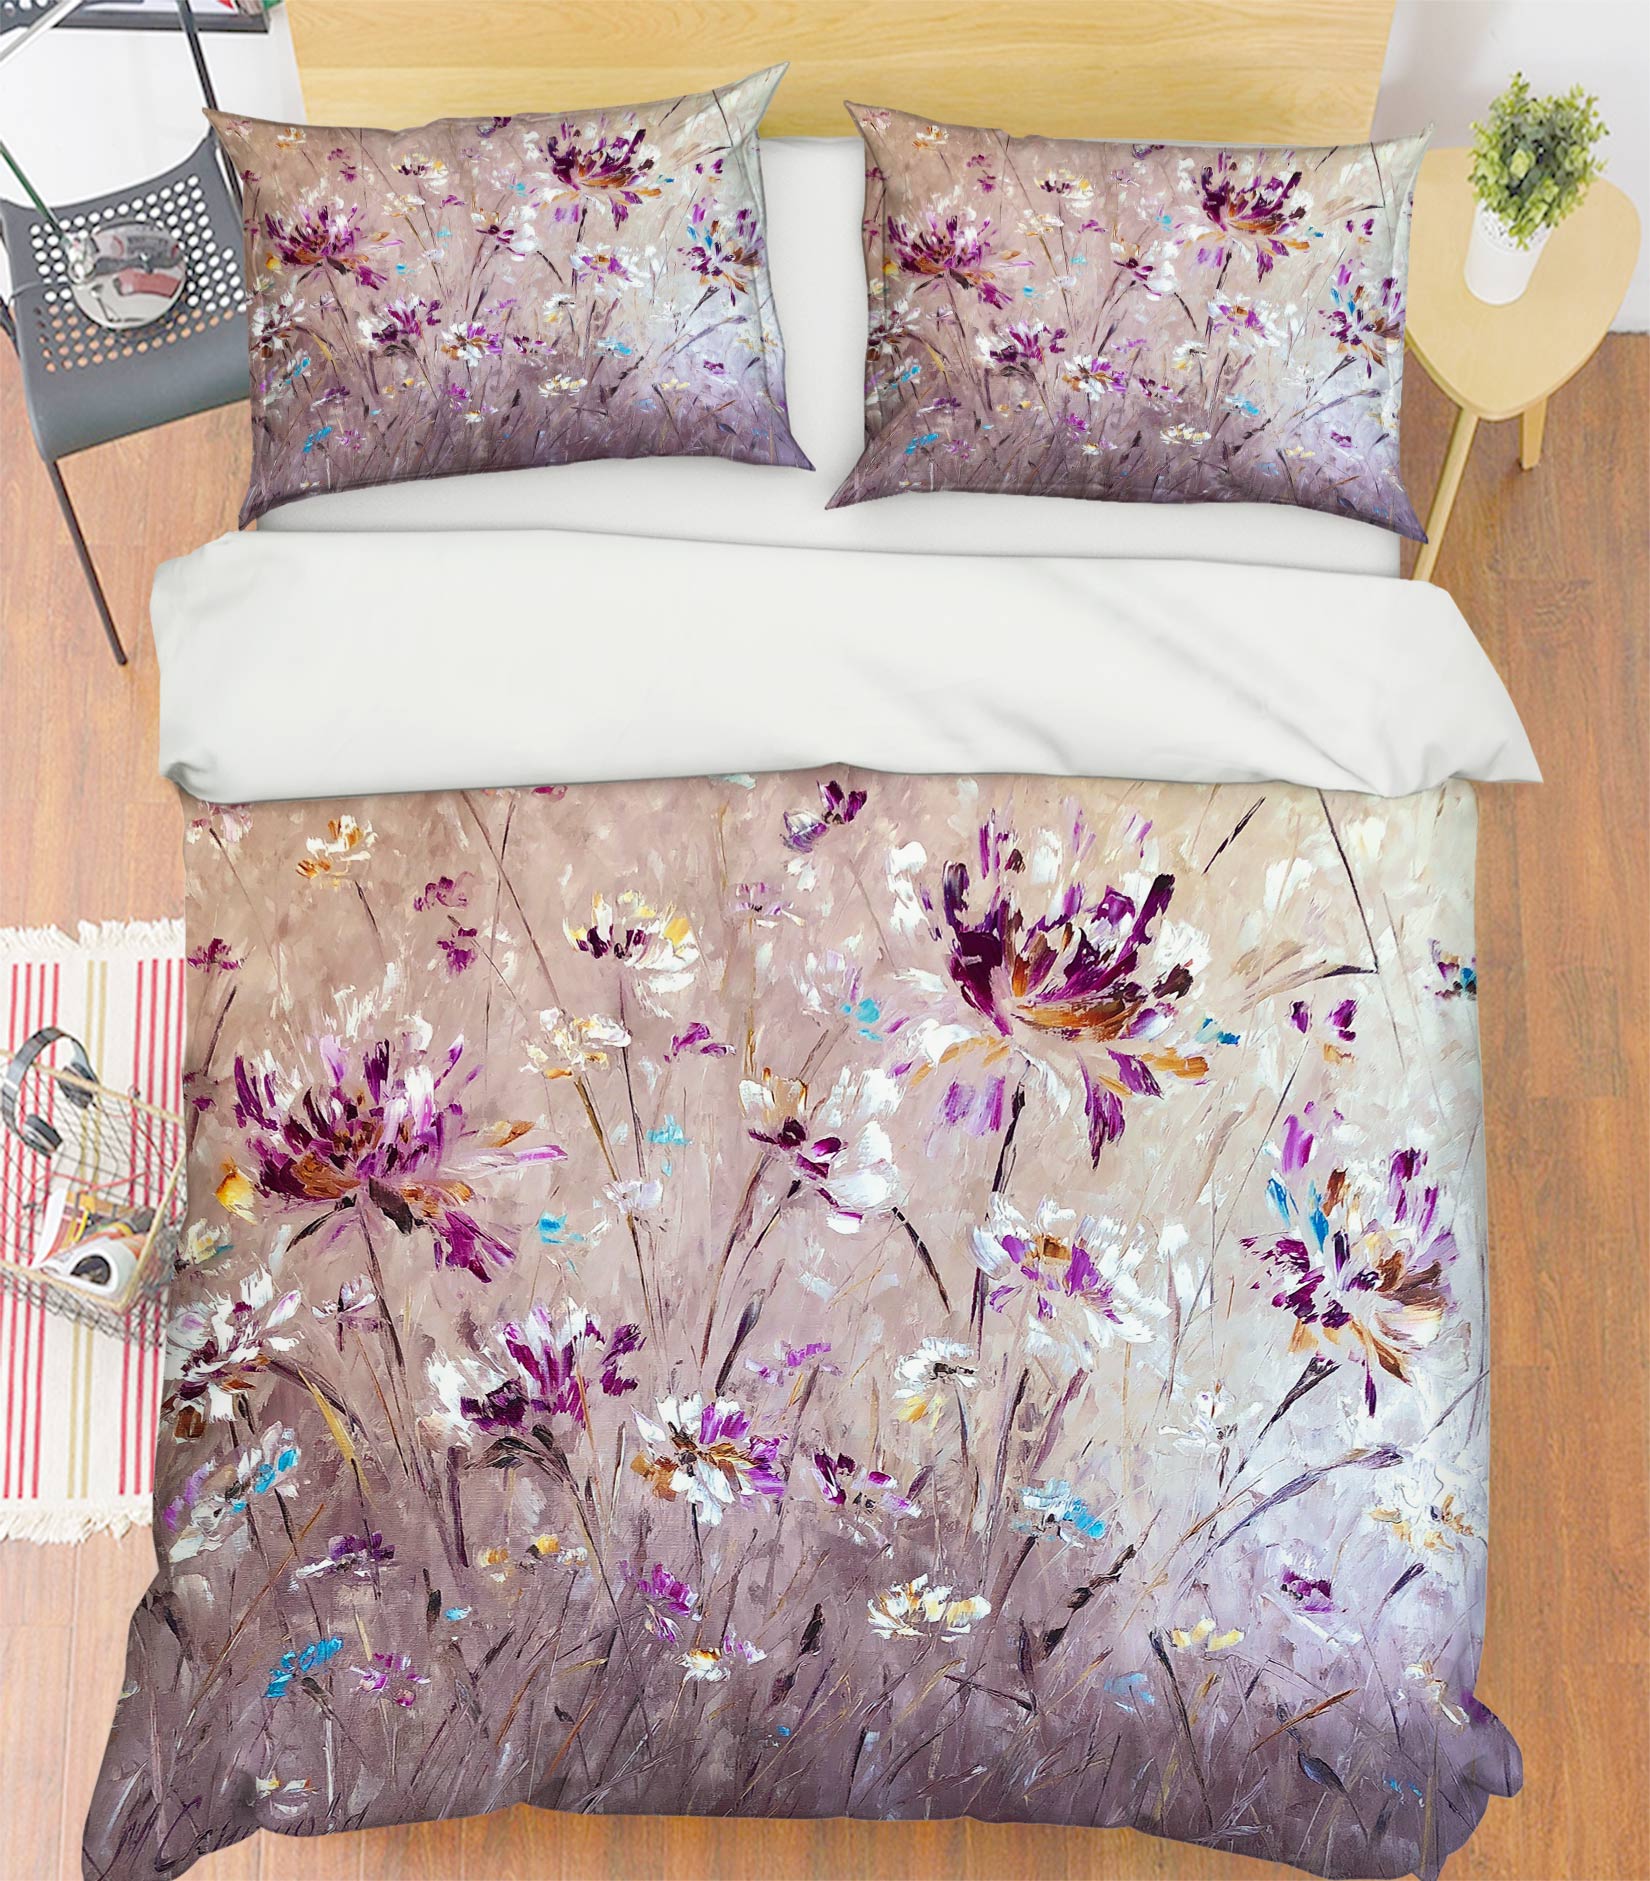 3D Cute Wildflowers 500 Skromova Marina Bedding Bed Pillowcases Quilt